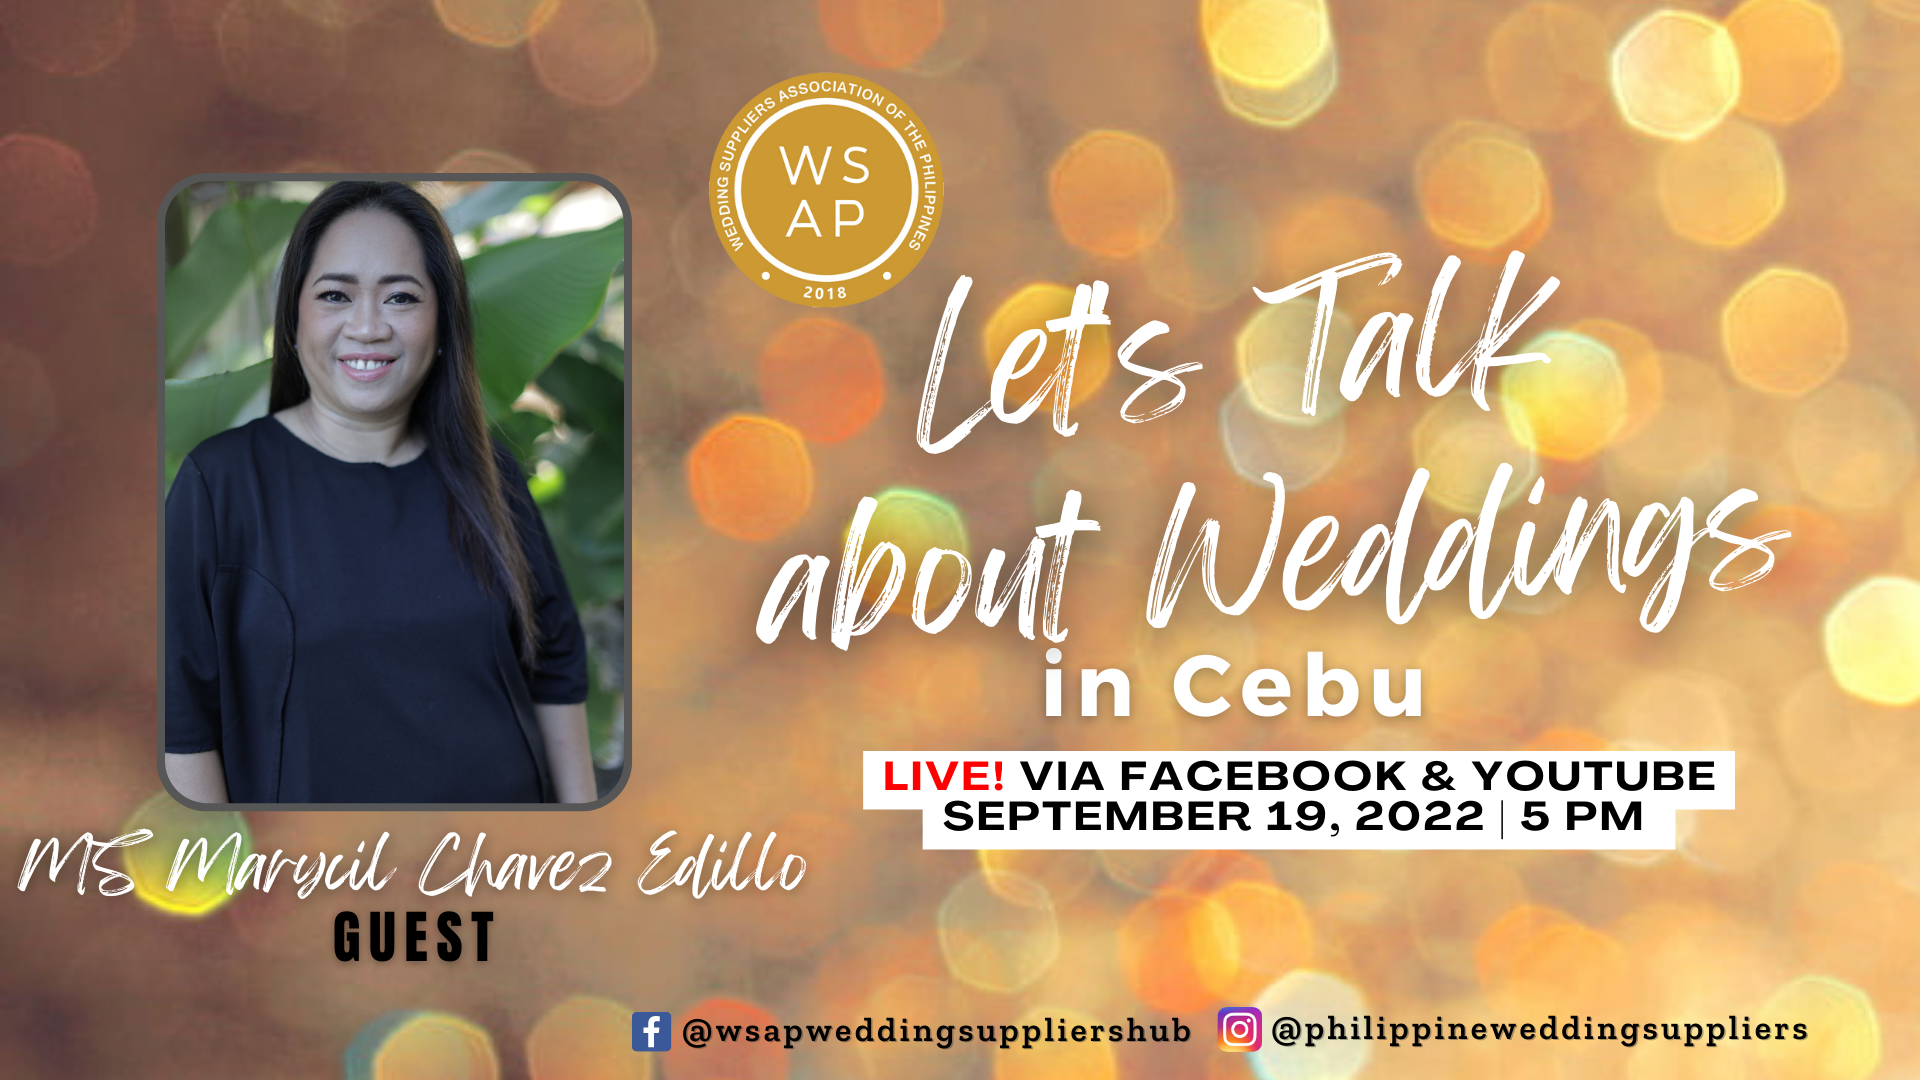 Let's Talk About Weddings in Cebu with Marycil Chavez Edillo